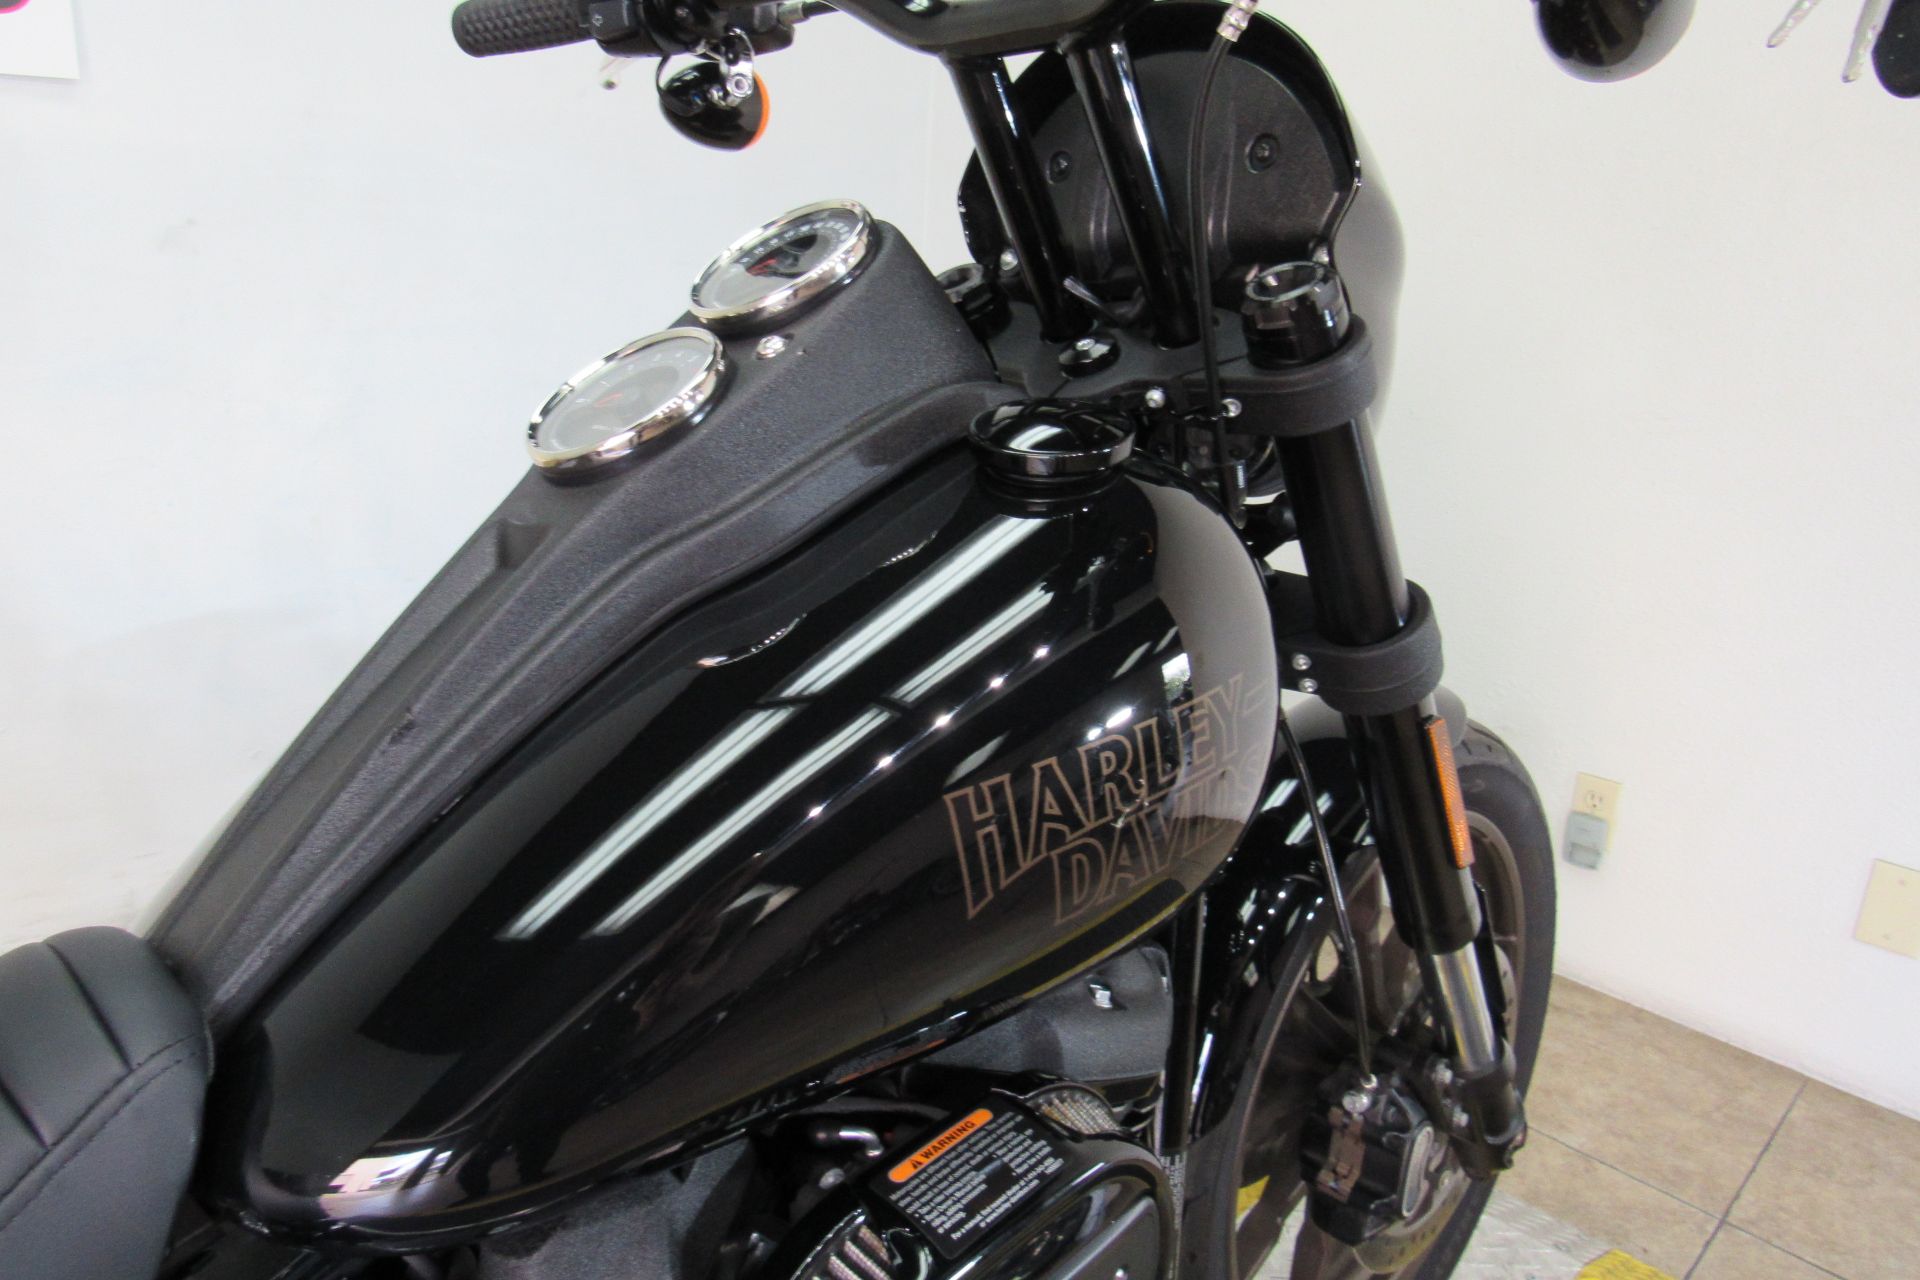 2020 Harley-Davidson Low Rider®S in Temecula, California - Photo 25